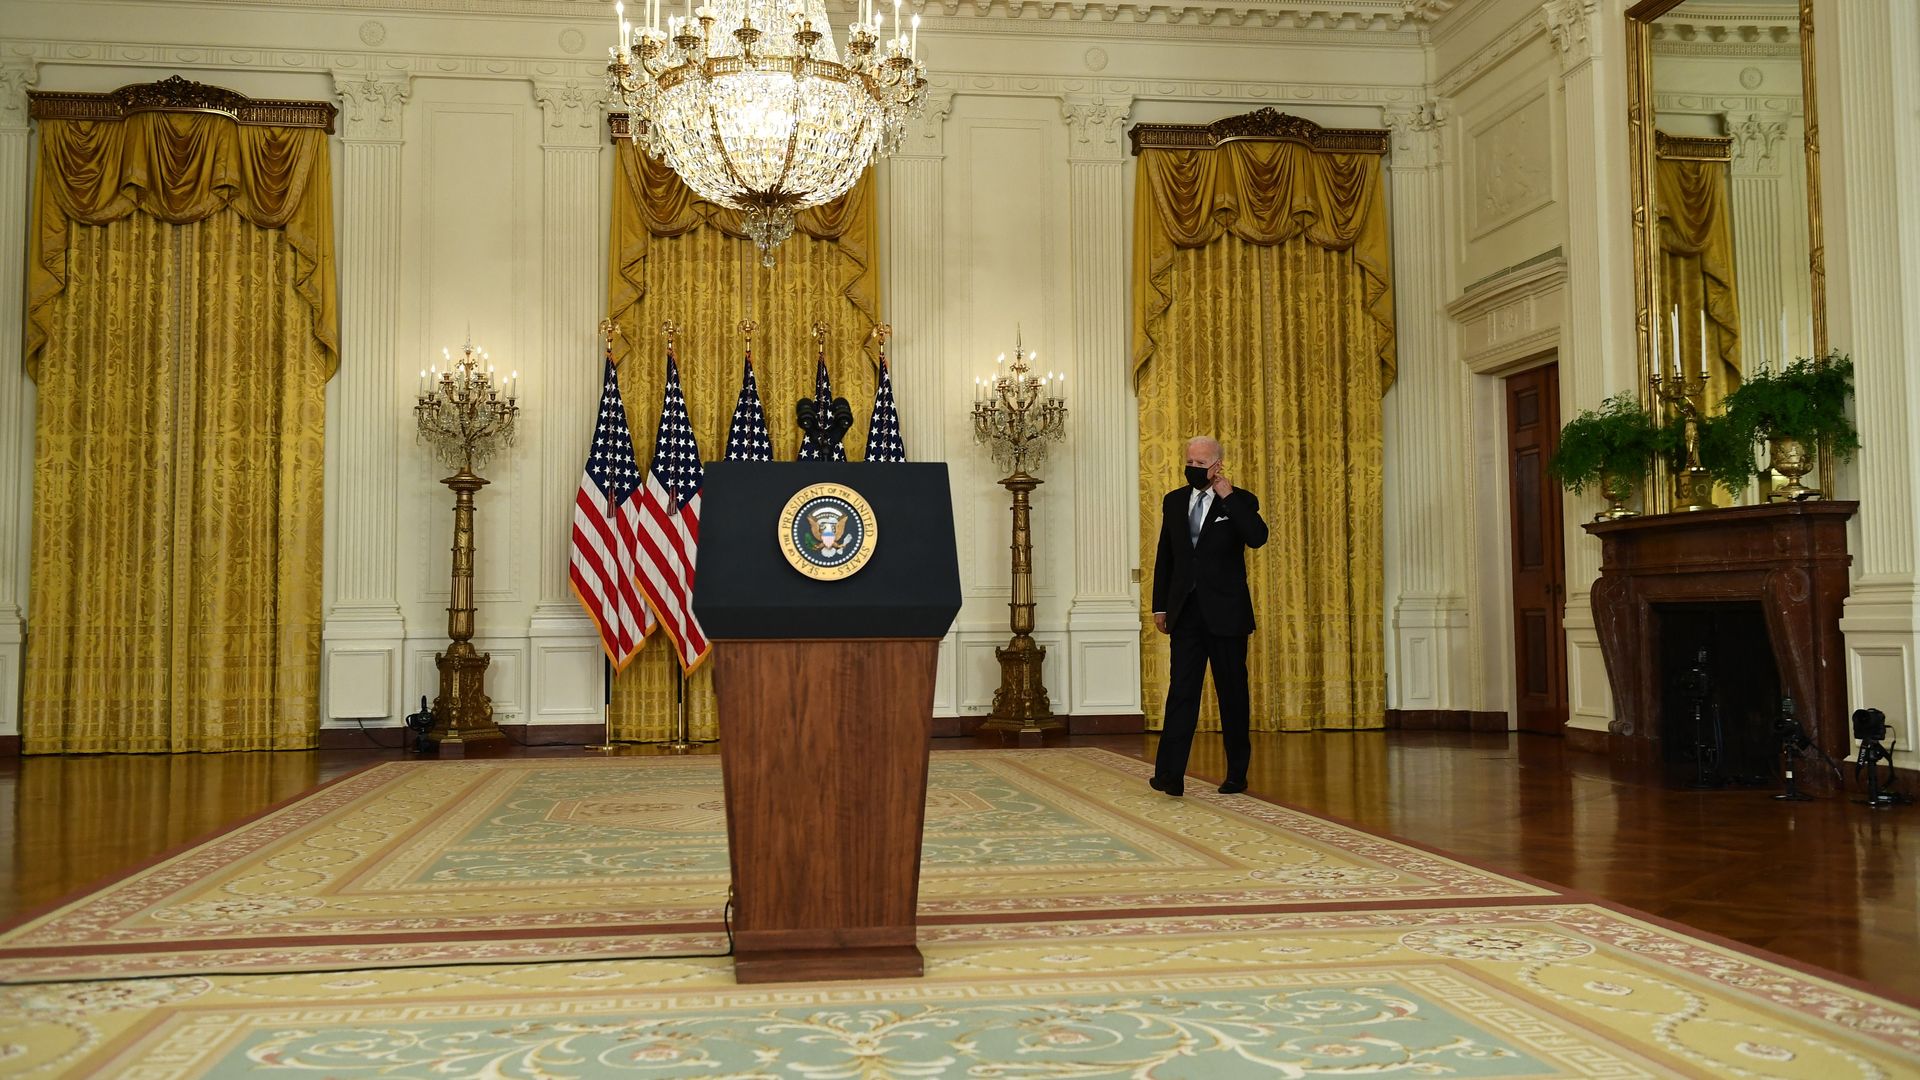 Biden arrives to speak at the White House podium